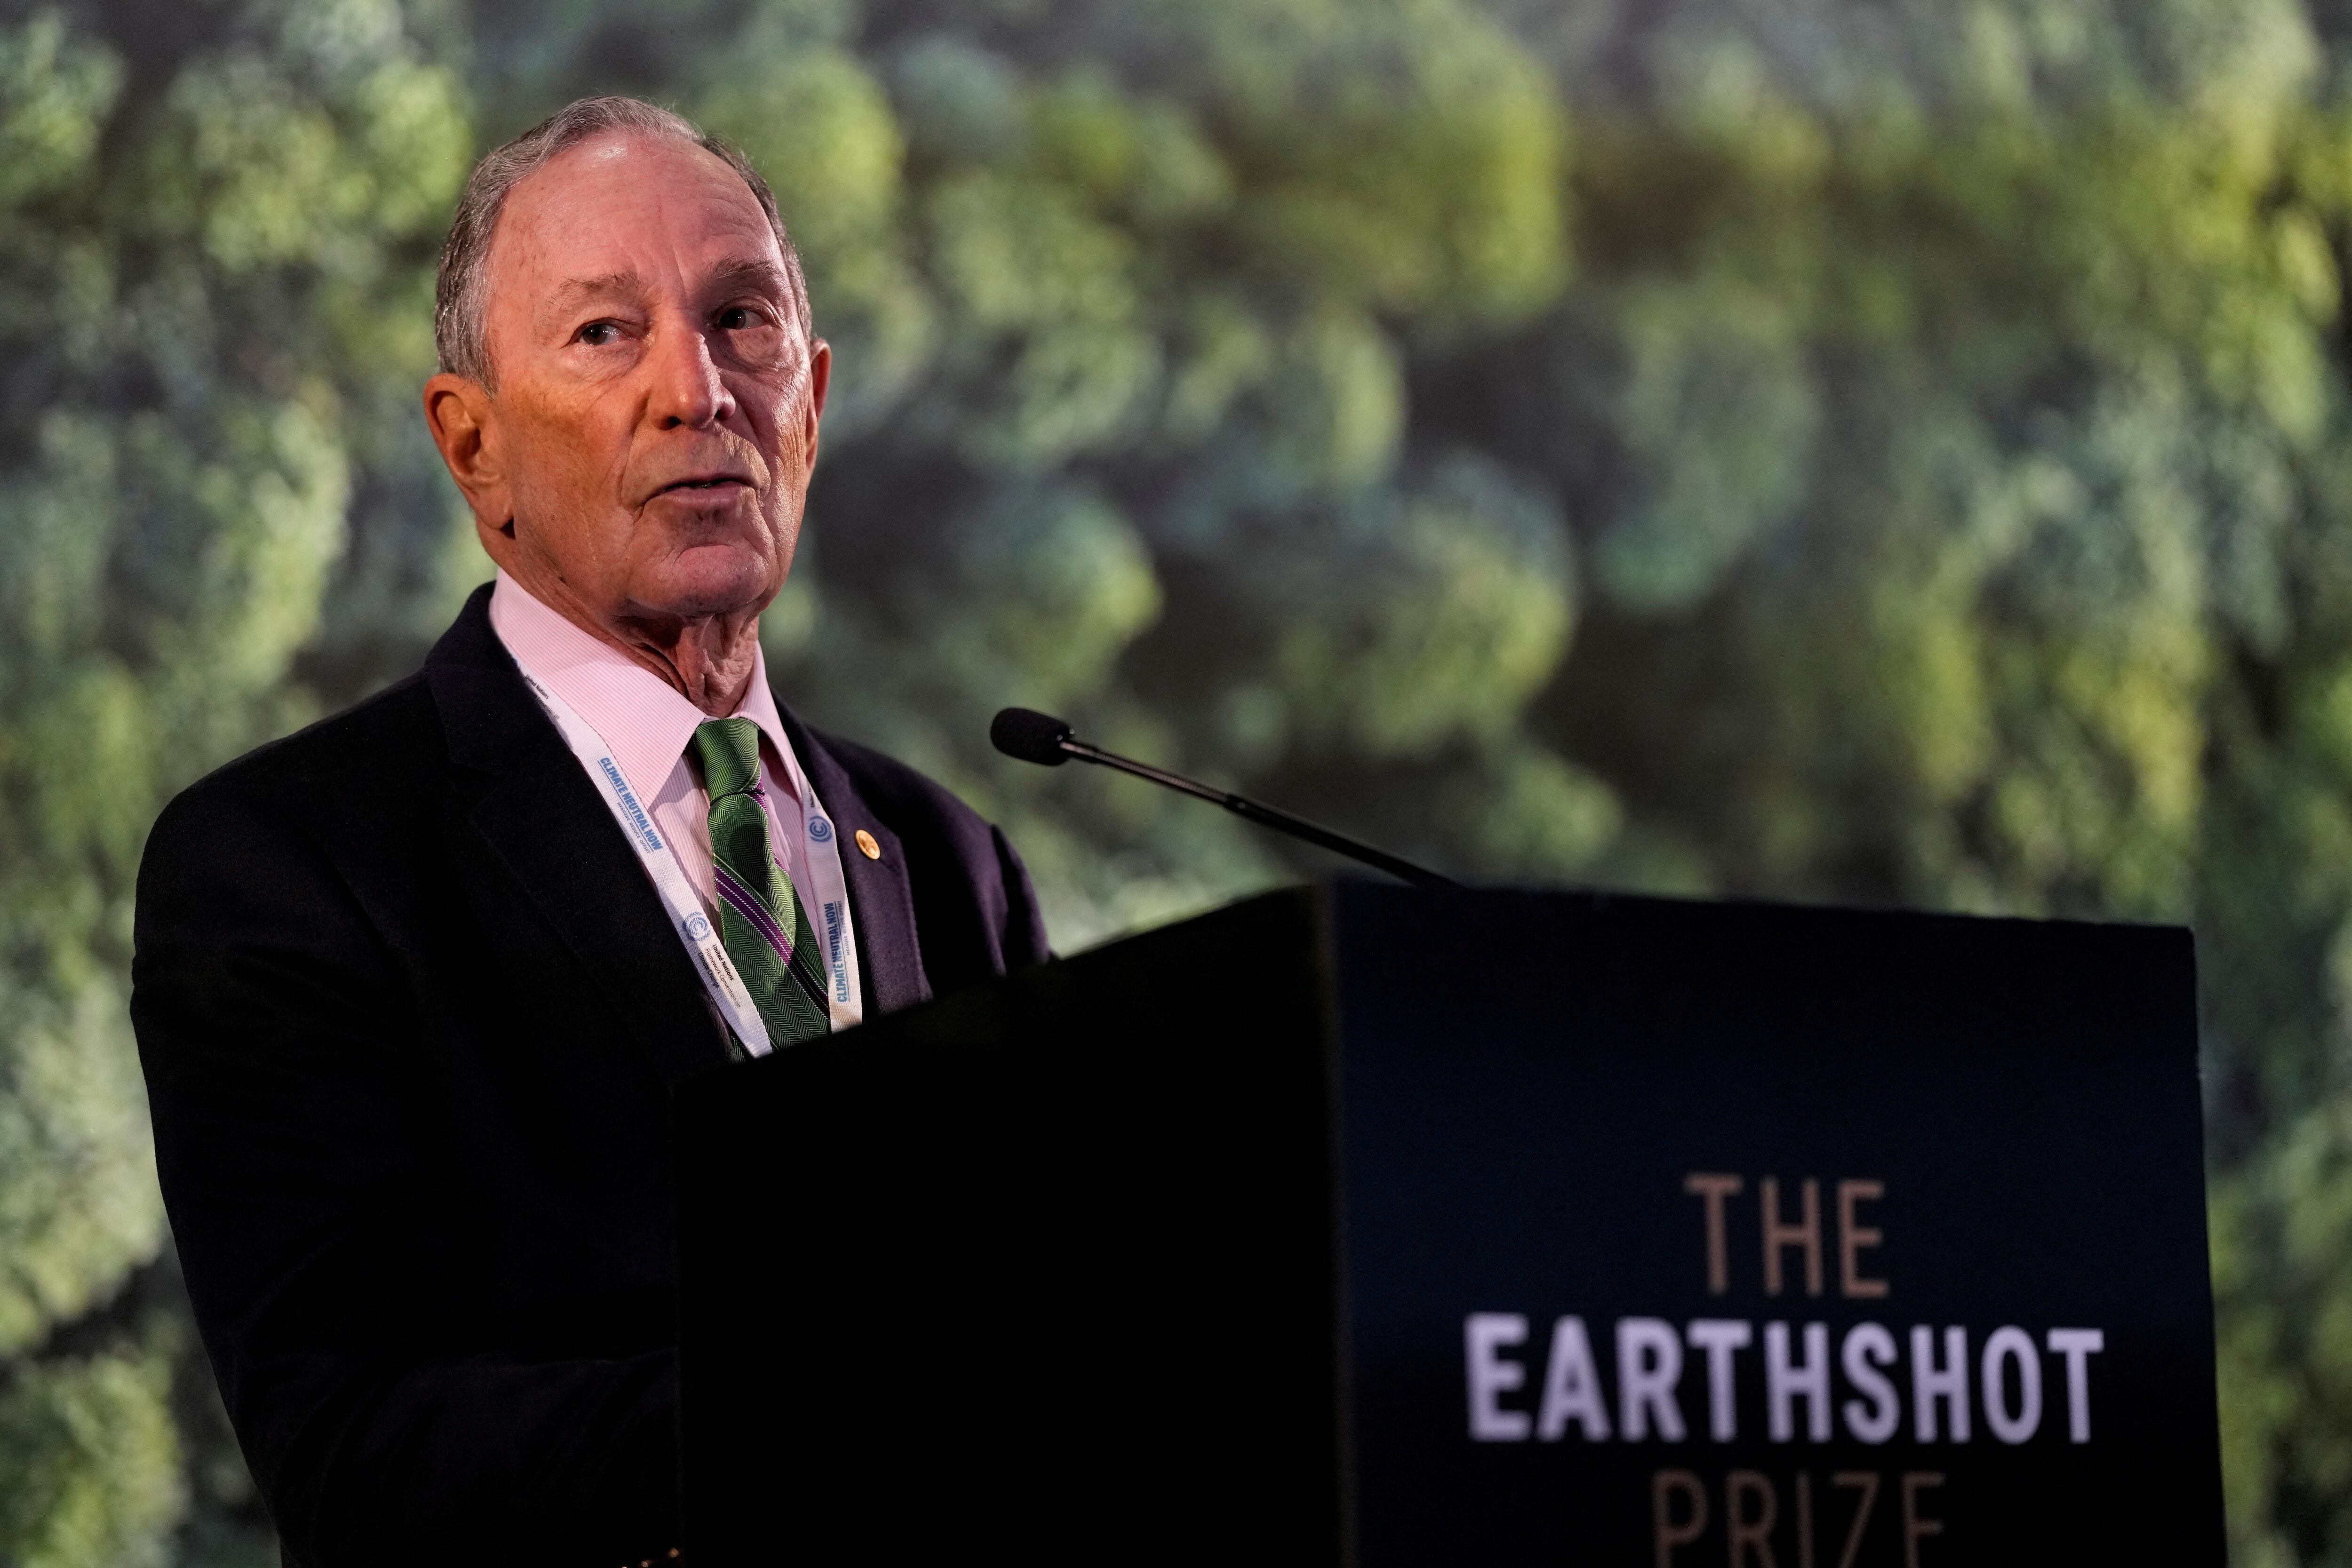  Michael Bloomberg. Alastair Grant/Pool via REUTERS/File Photo